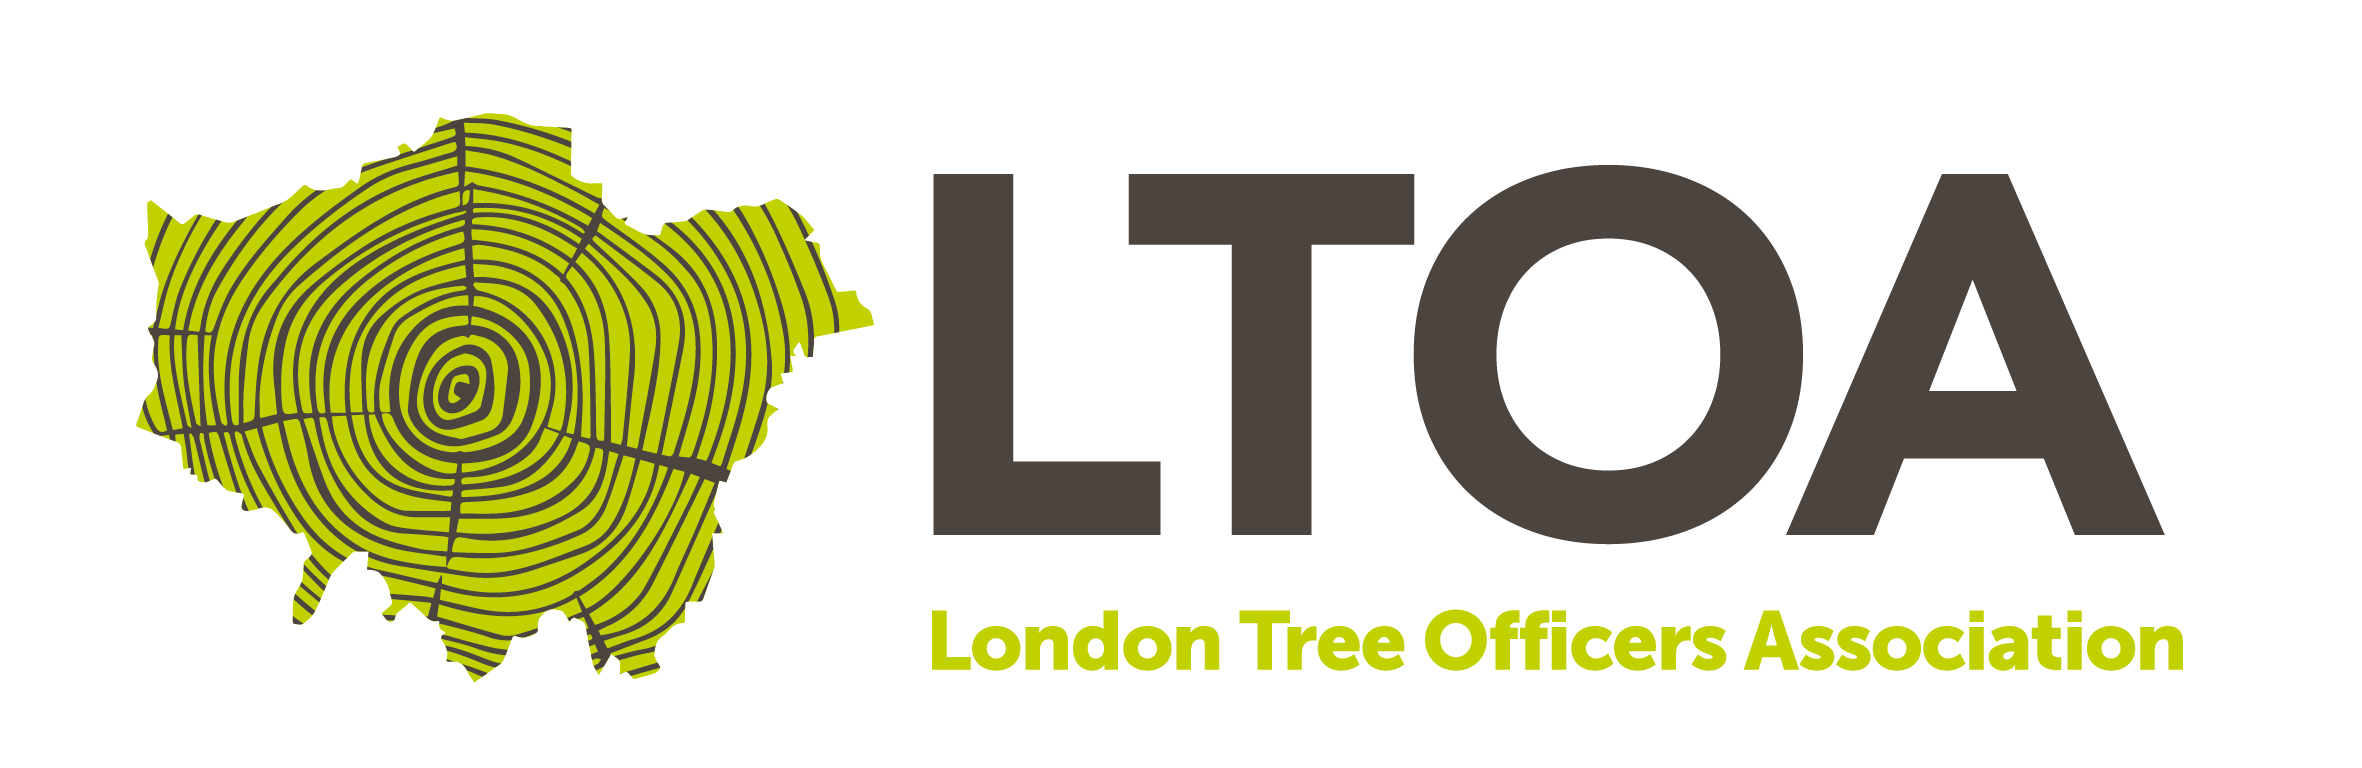 London Tree Officers Association